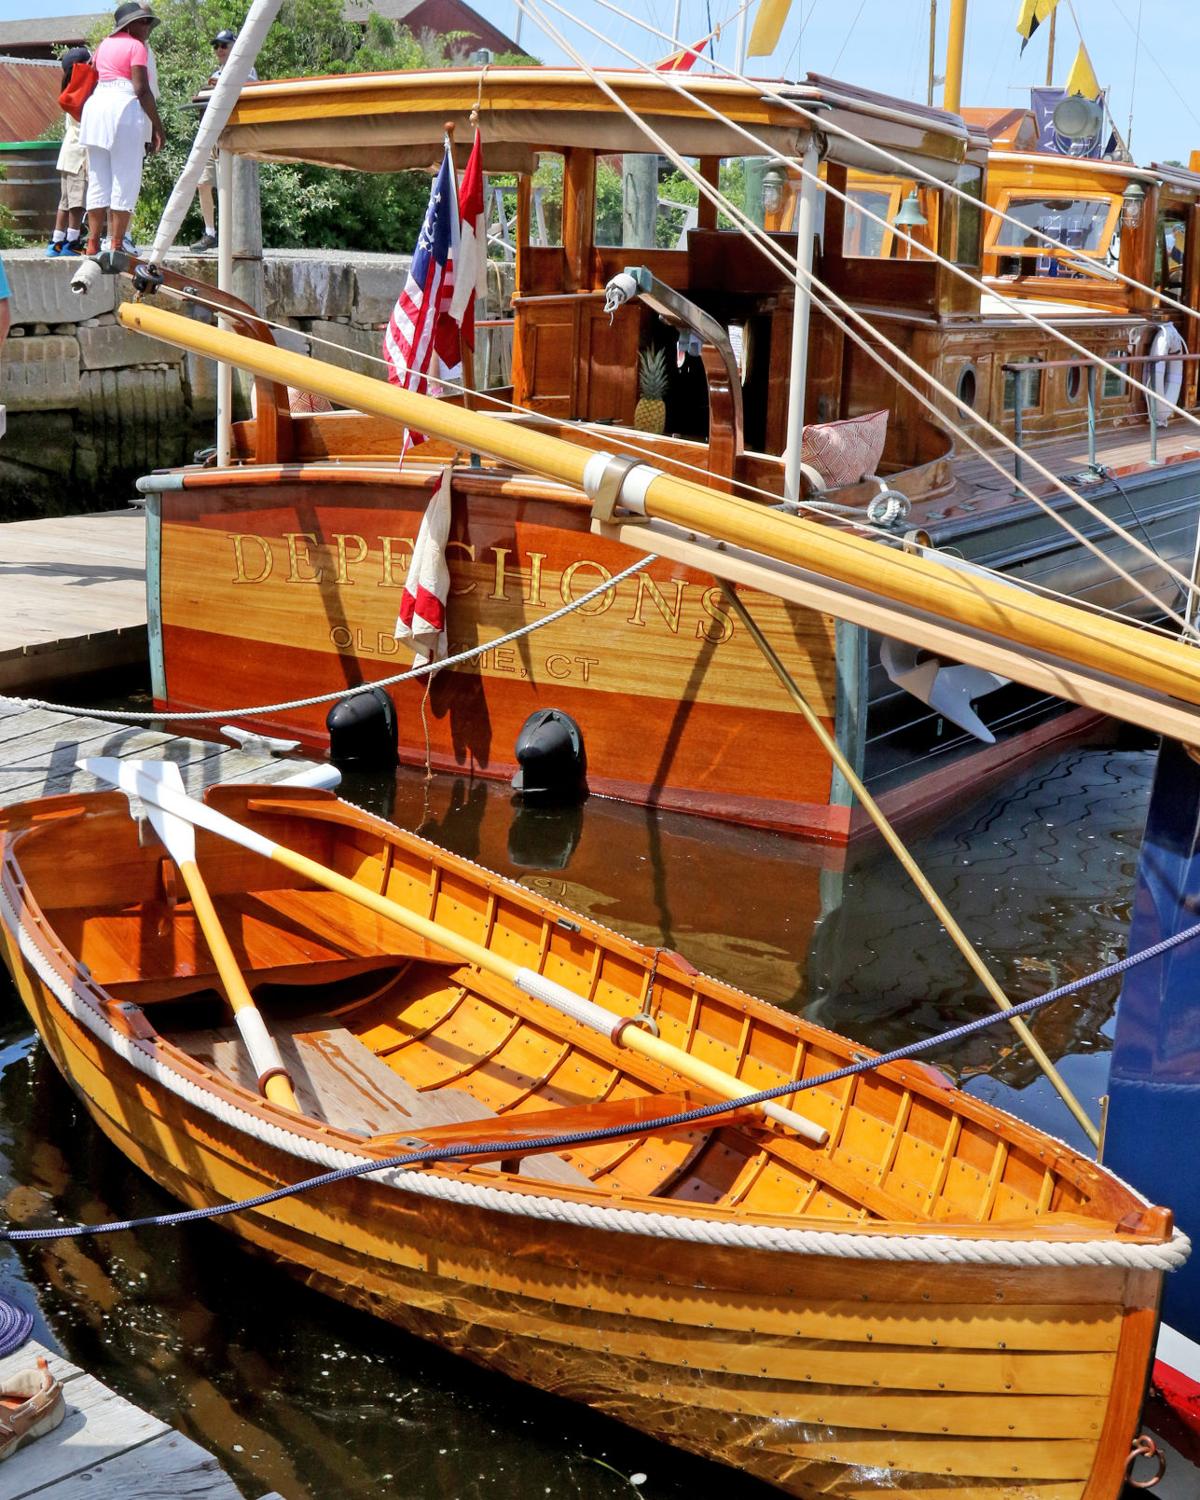 PHOTOS Wooden boat show at Mystic Seaport Museum Stonington